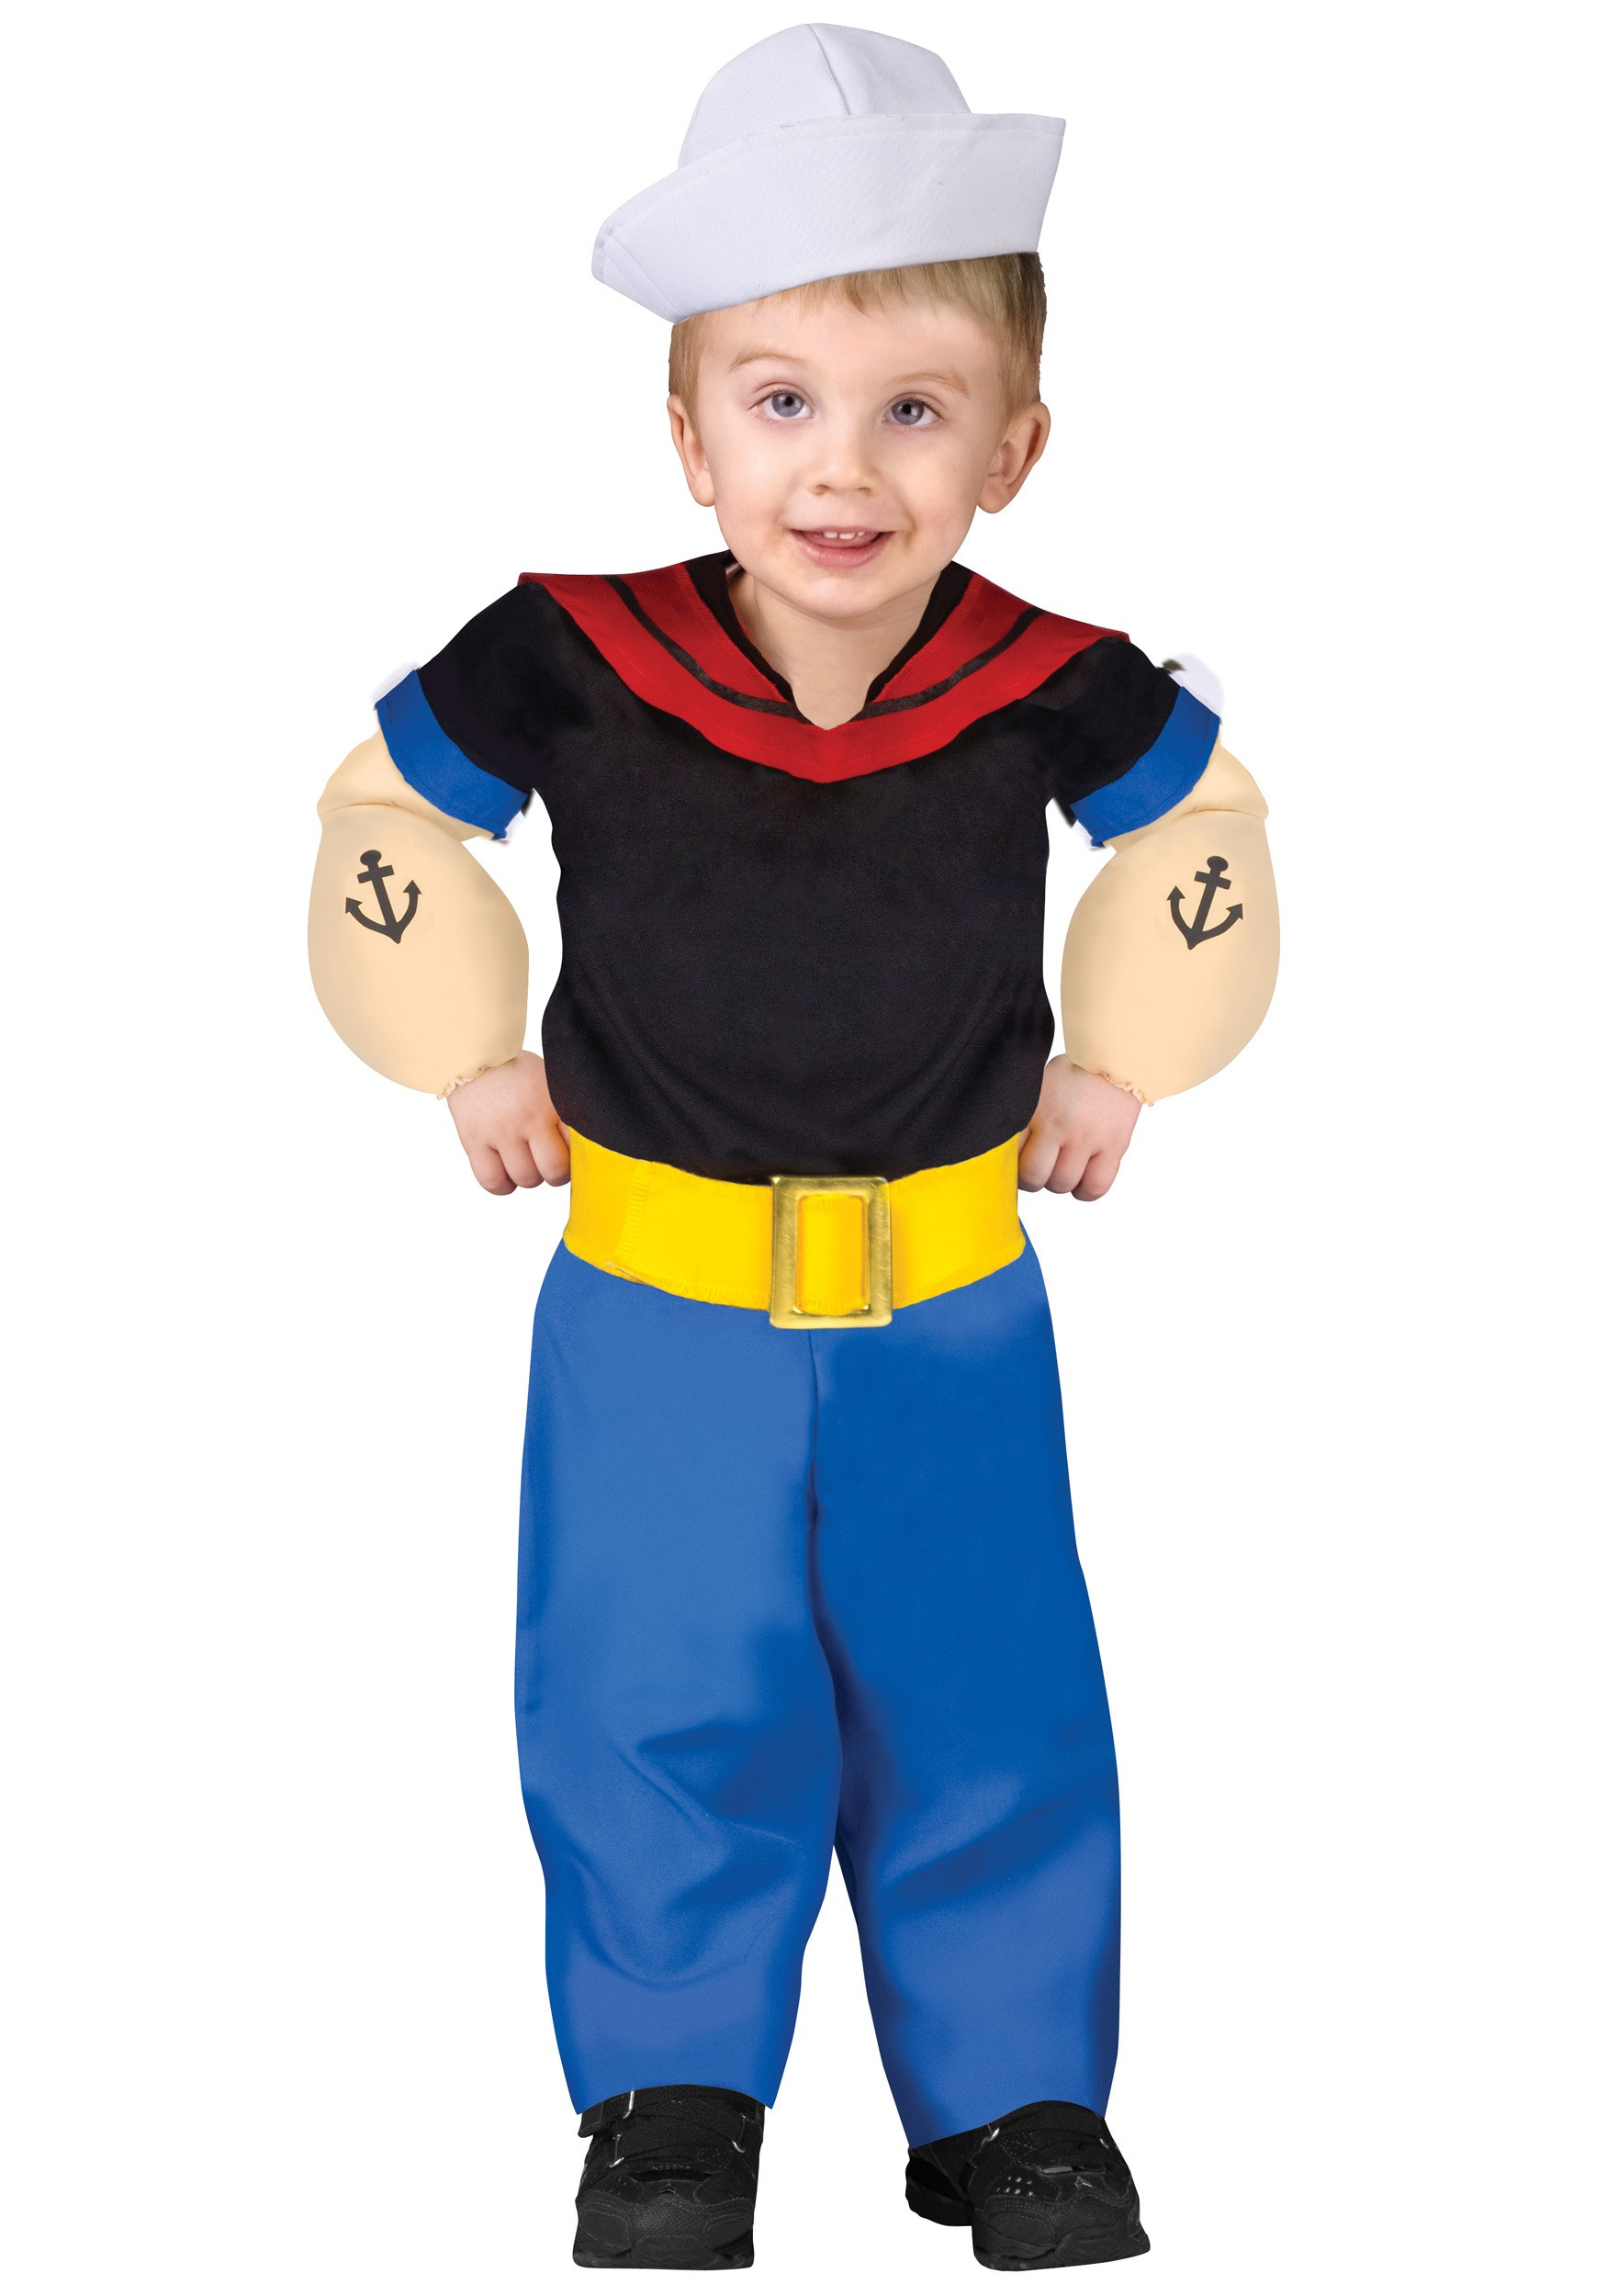 DIY Halloween Costumes For Toddler Boys
 Toddler Boys Popeye Costume Popeye Costumes for Kids